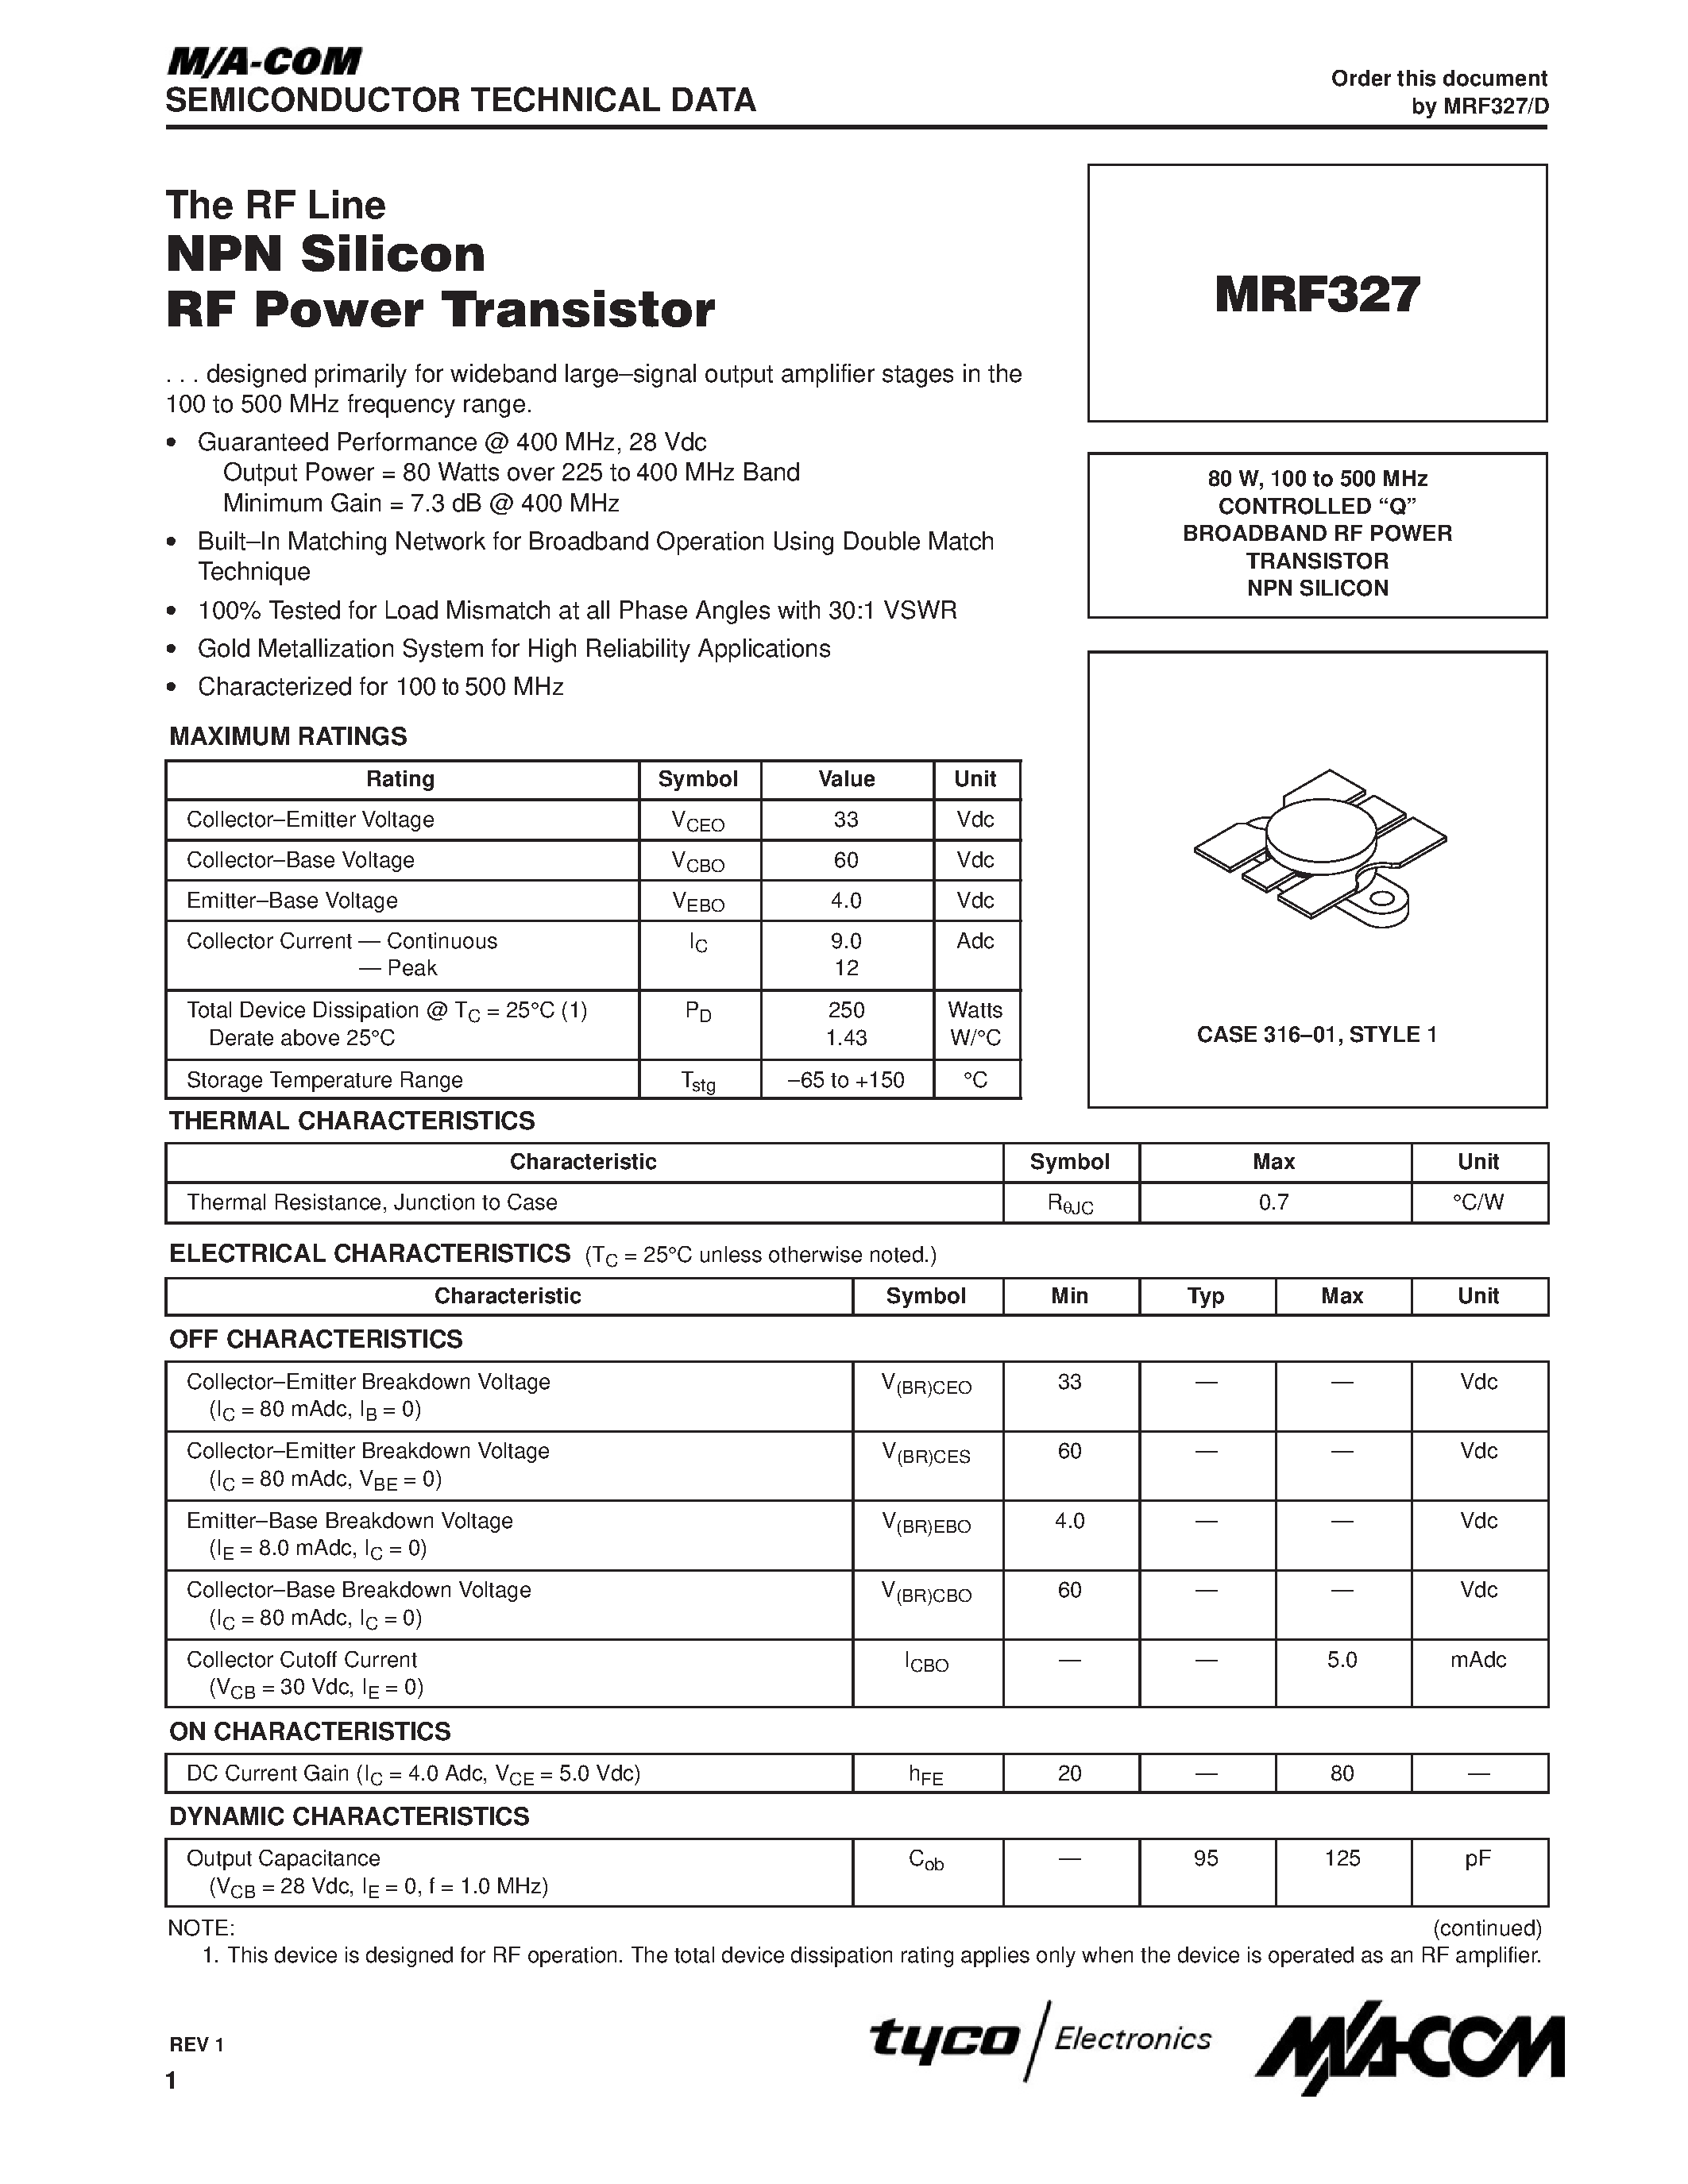 Даташит M32000D4AFP - CONTROLLED Q BROADBAND RF POWER TRANSISTOR NPN SILICON страница 1